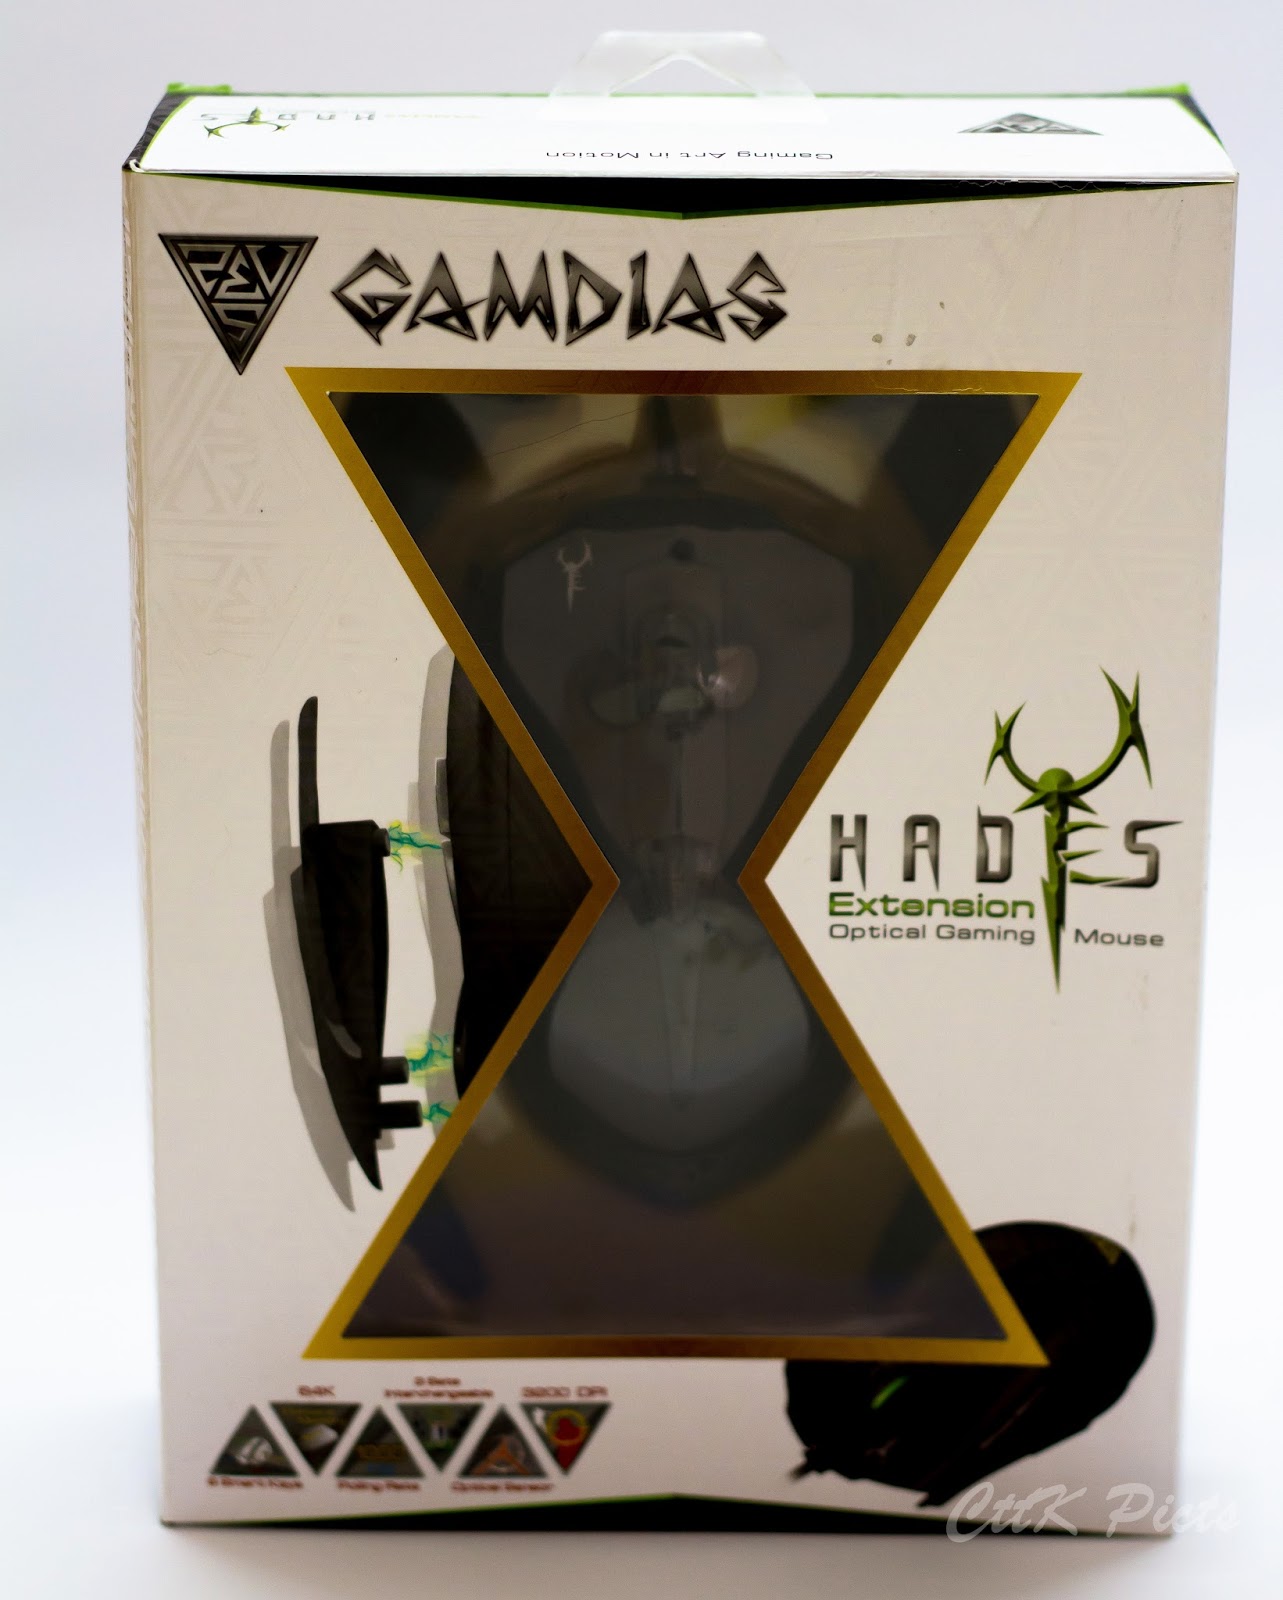 Gamdias Hades Extension Optical Gaming Mouse 4